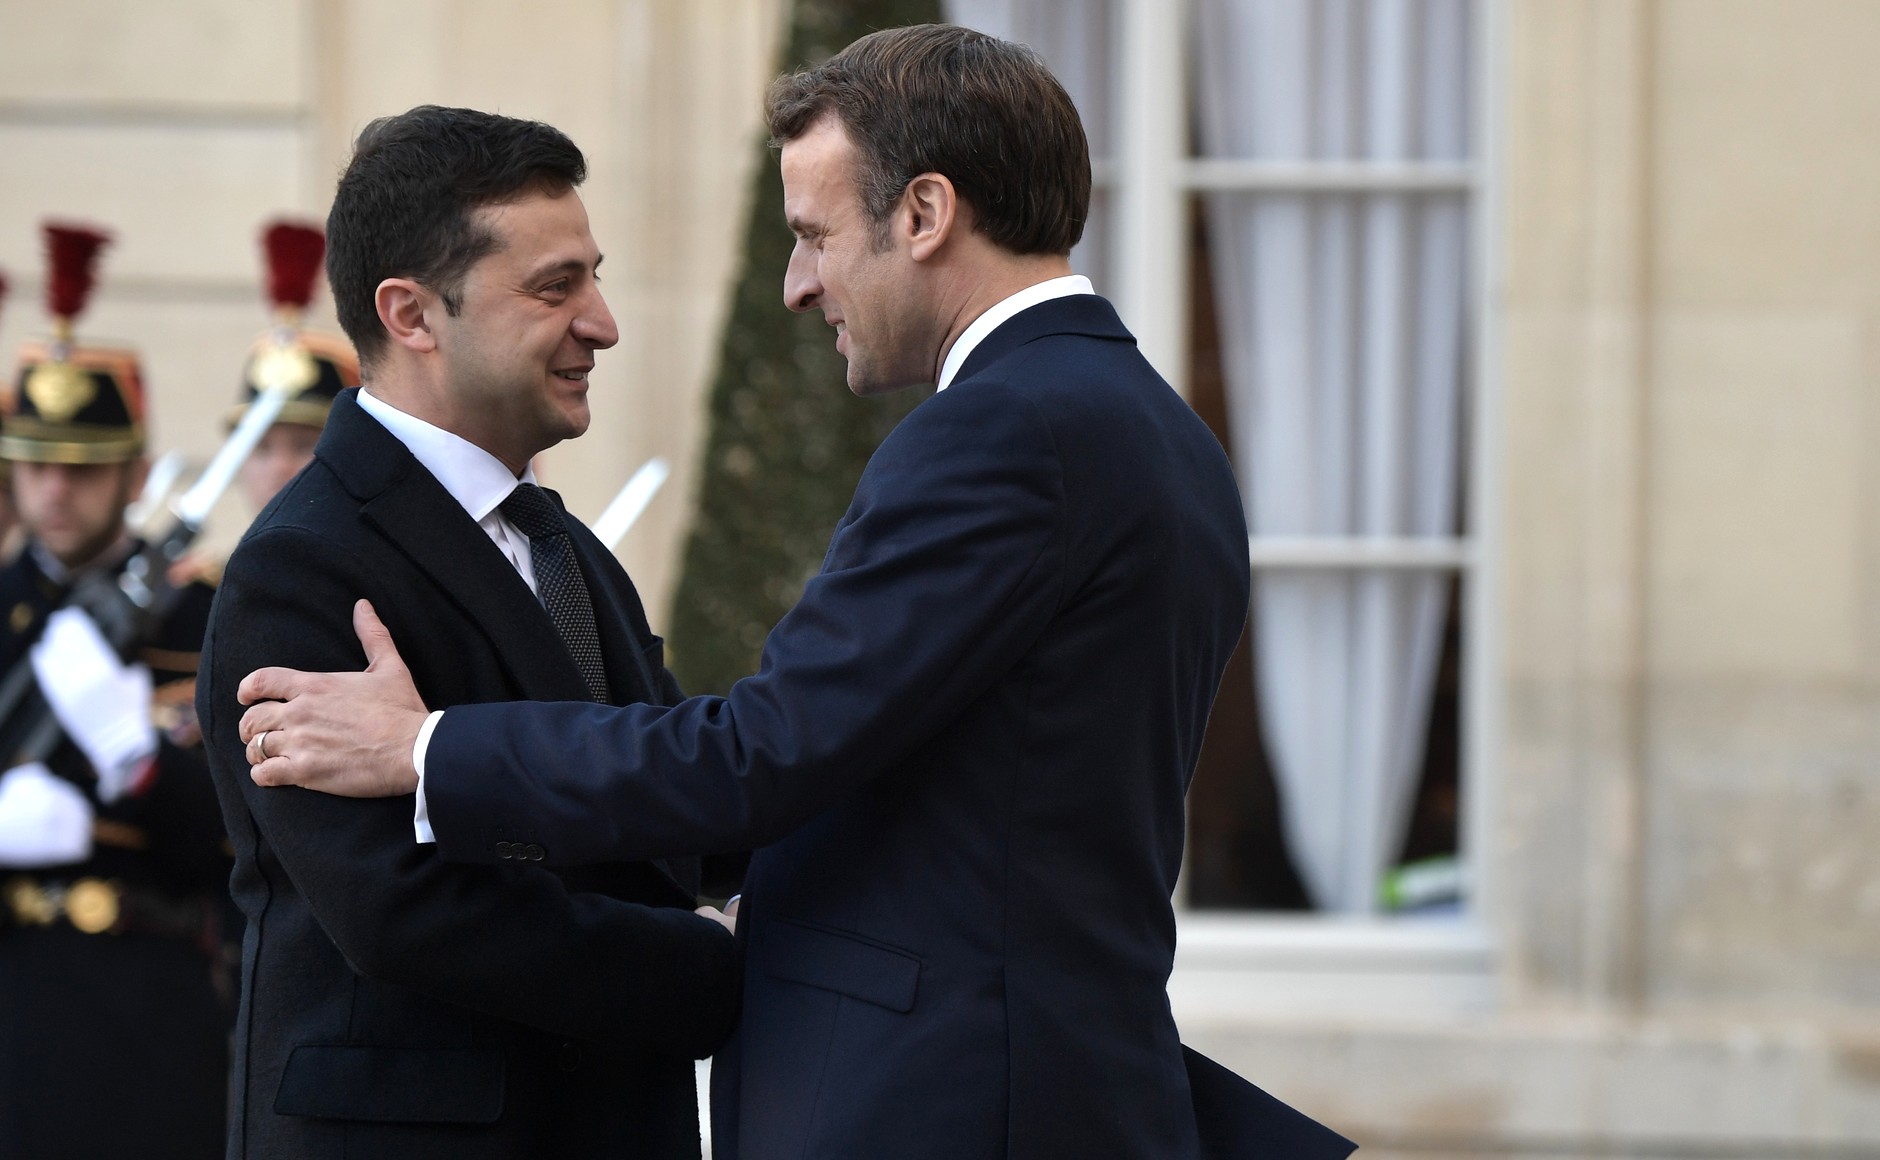 Vladimir_Zelensky_and_Emmanuel_Macron_(2019-12-09).jpg